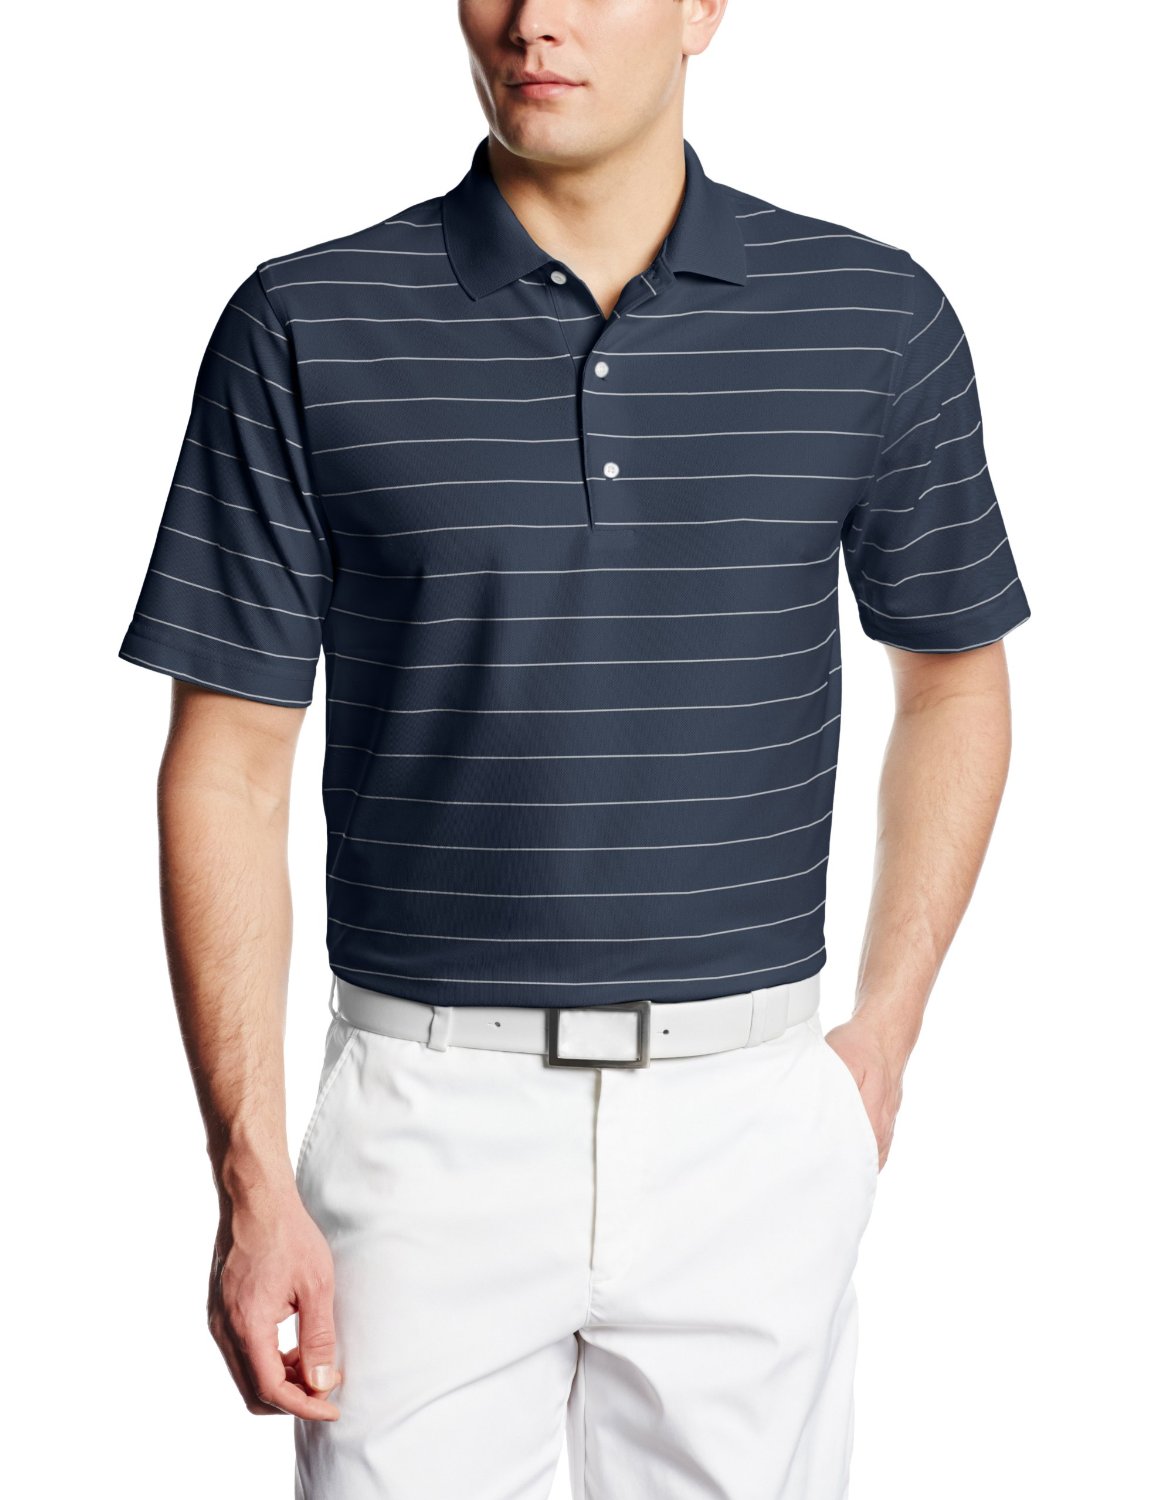 Greg Norman Mens ProTek Micro Pique Stripe Polo Shirts